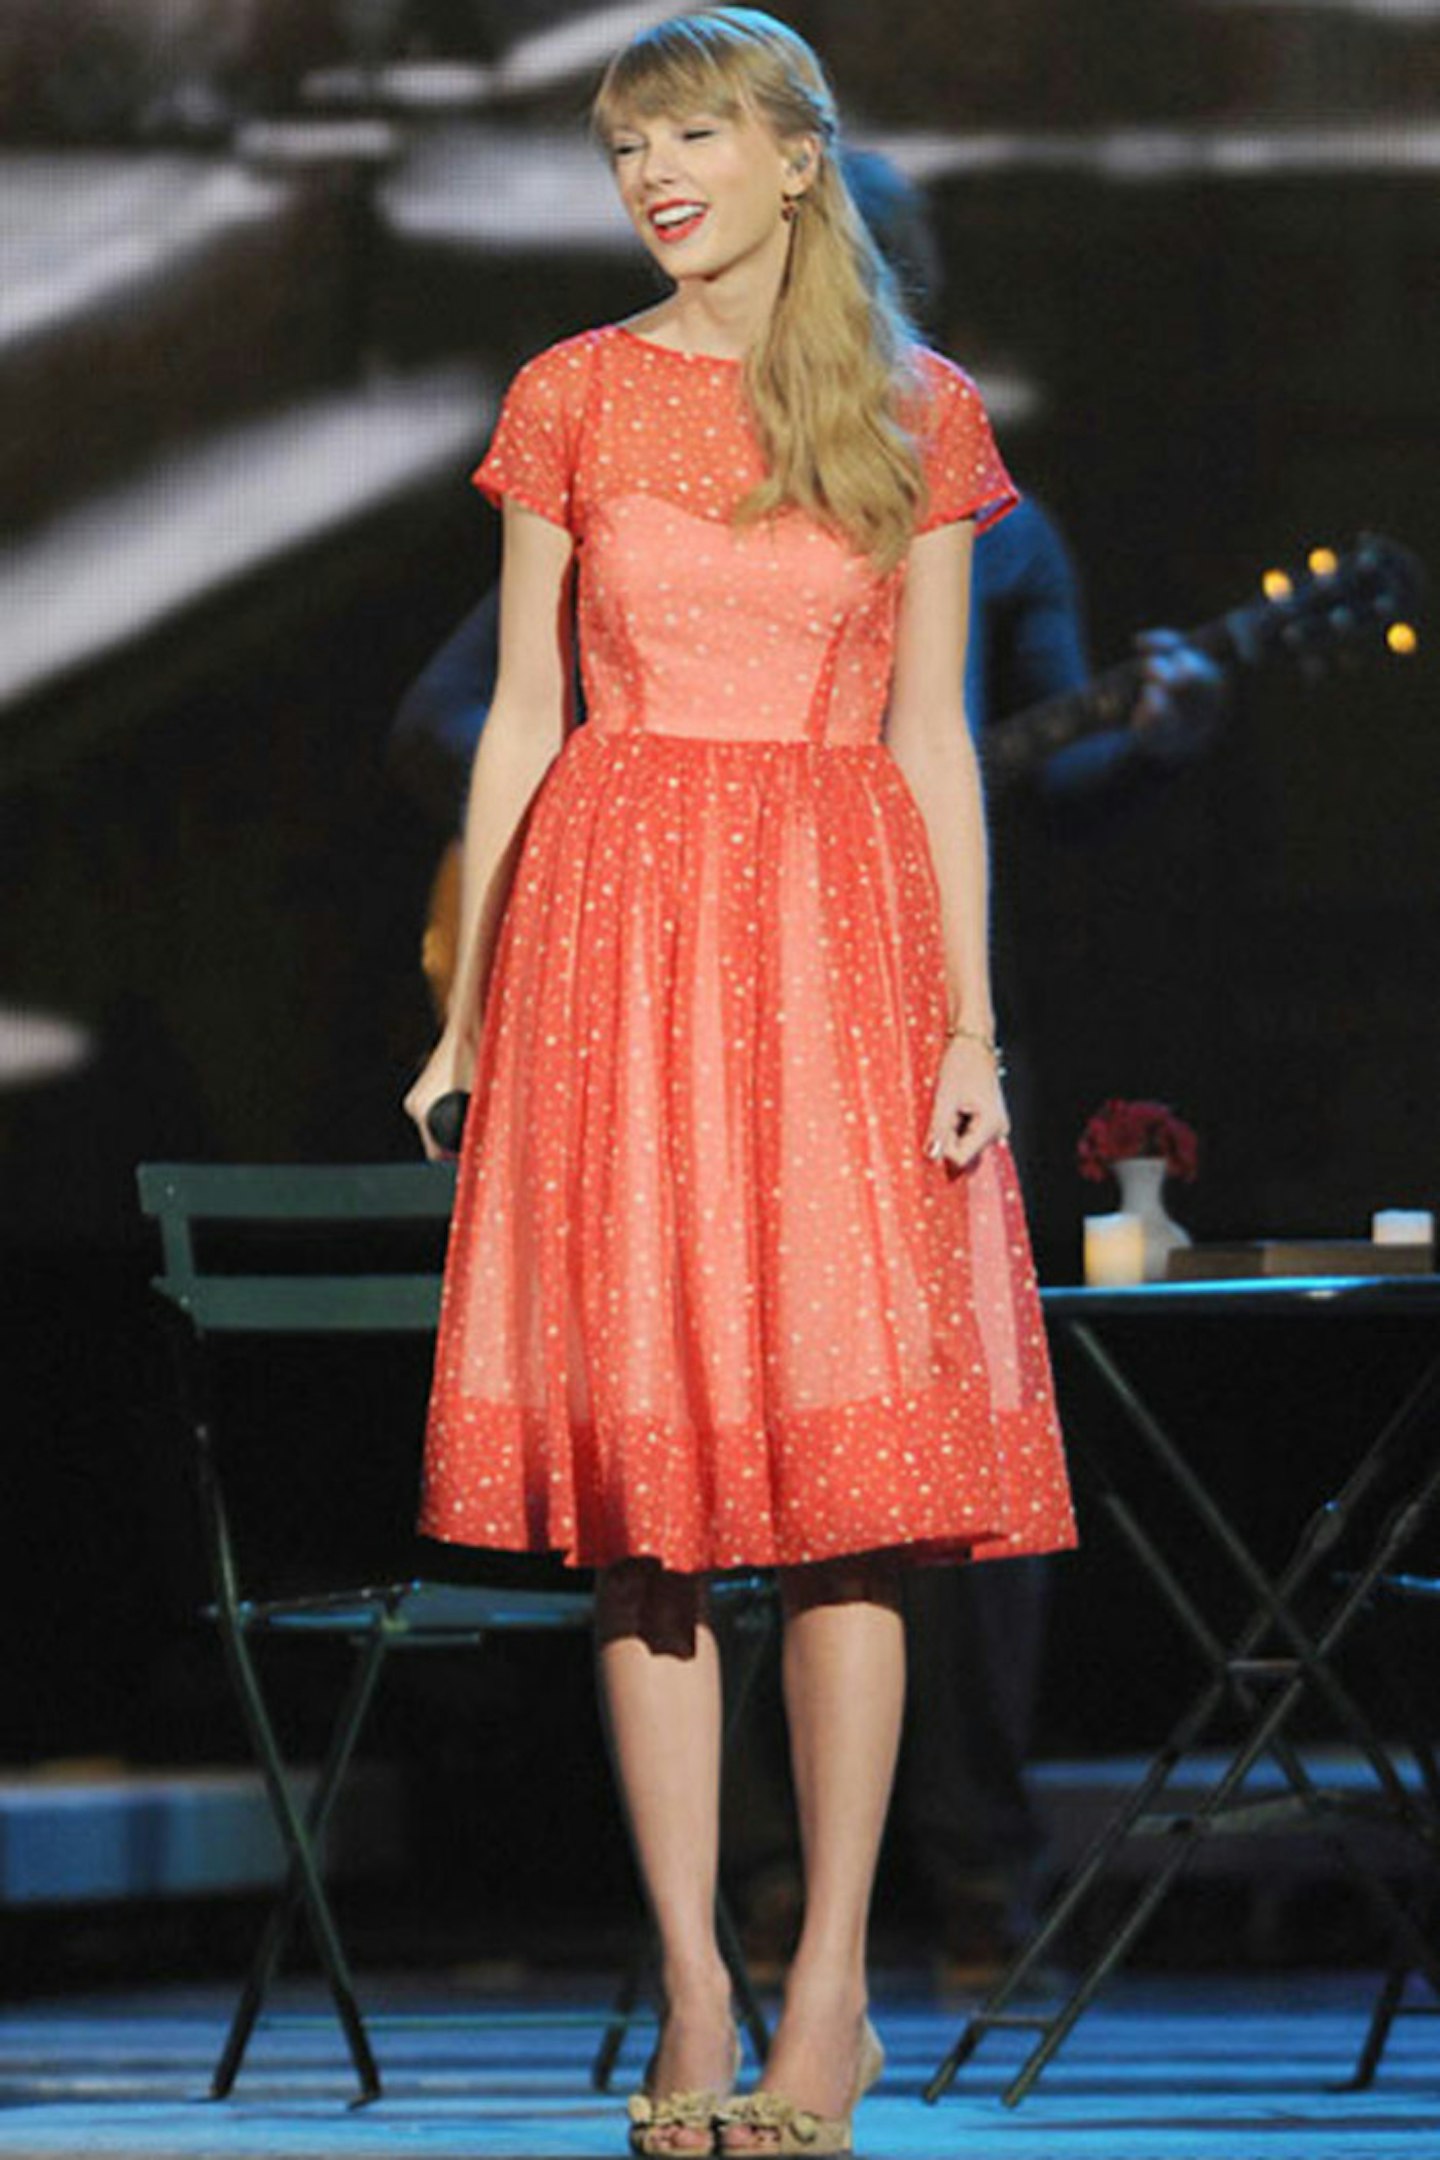 Taylor Swift at the CMA Awards Show in Nashville - 1 November 2012